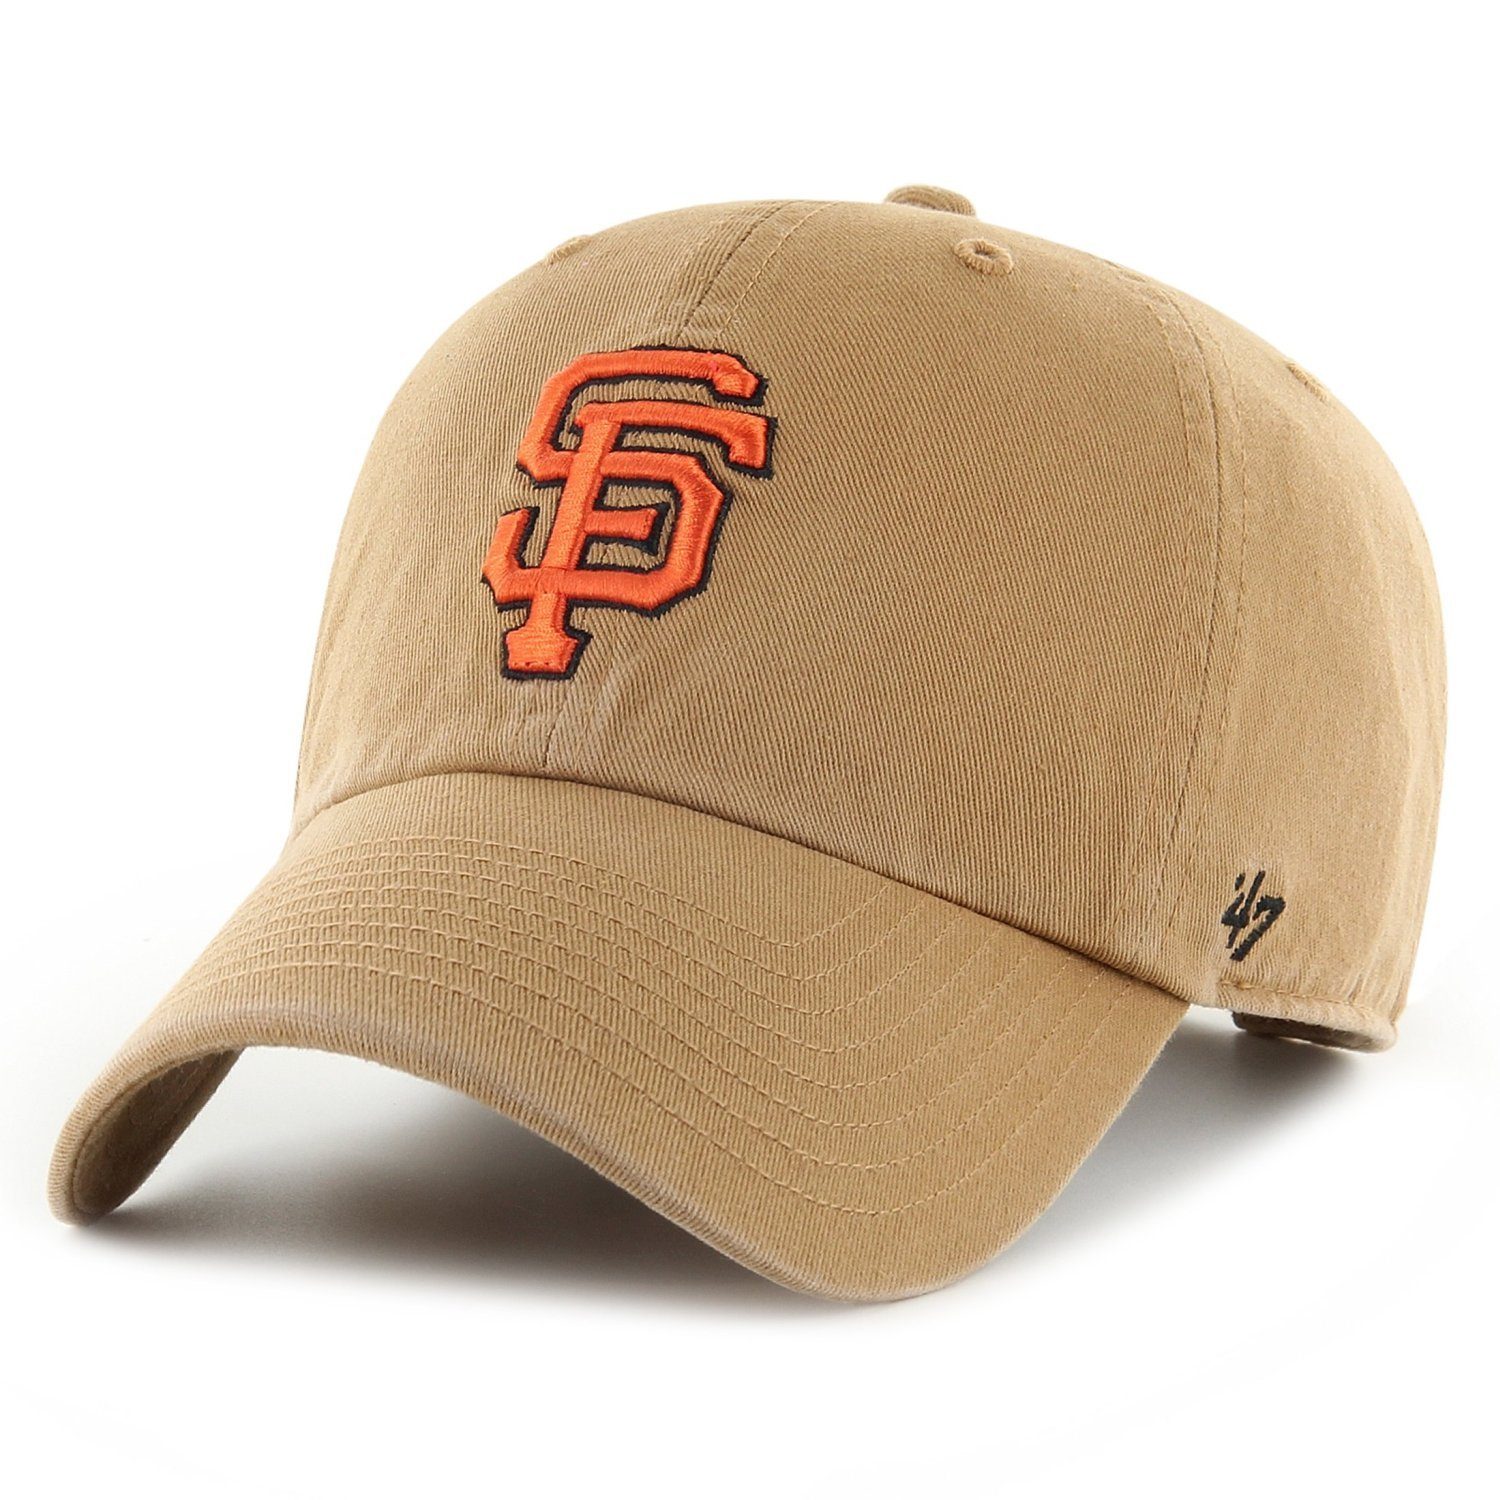 UP San '47 Strapback CLEAN Francisco Giants Brand Cap Baseball